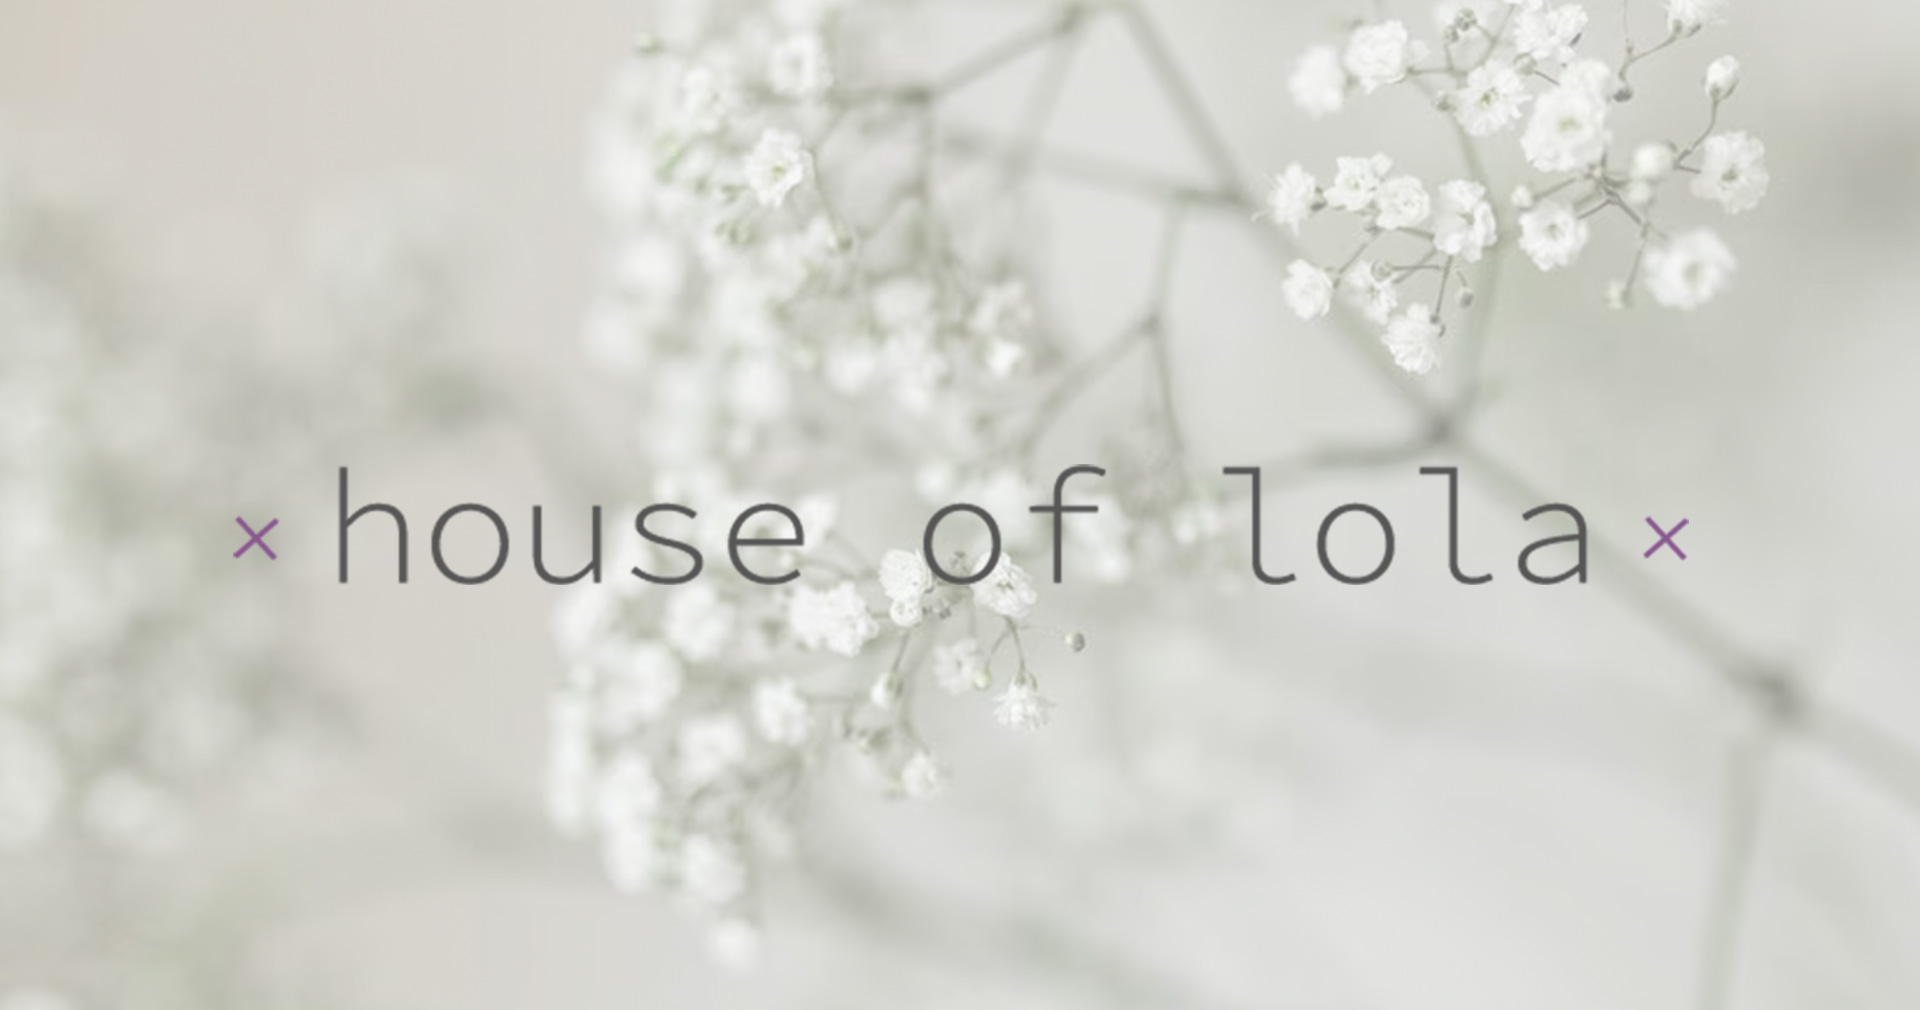 House of Lola